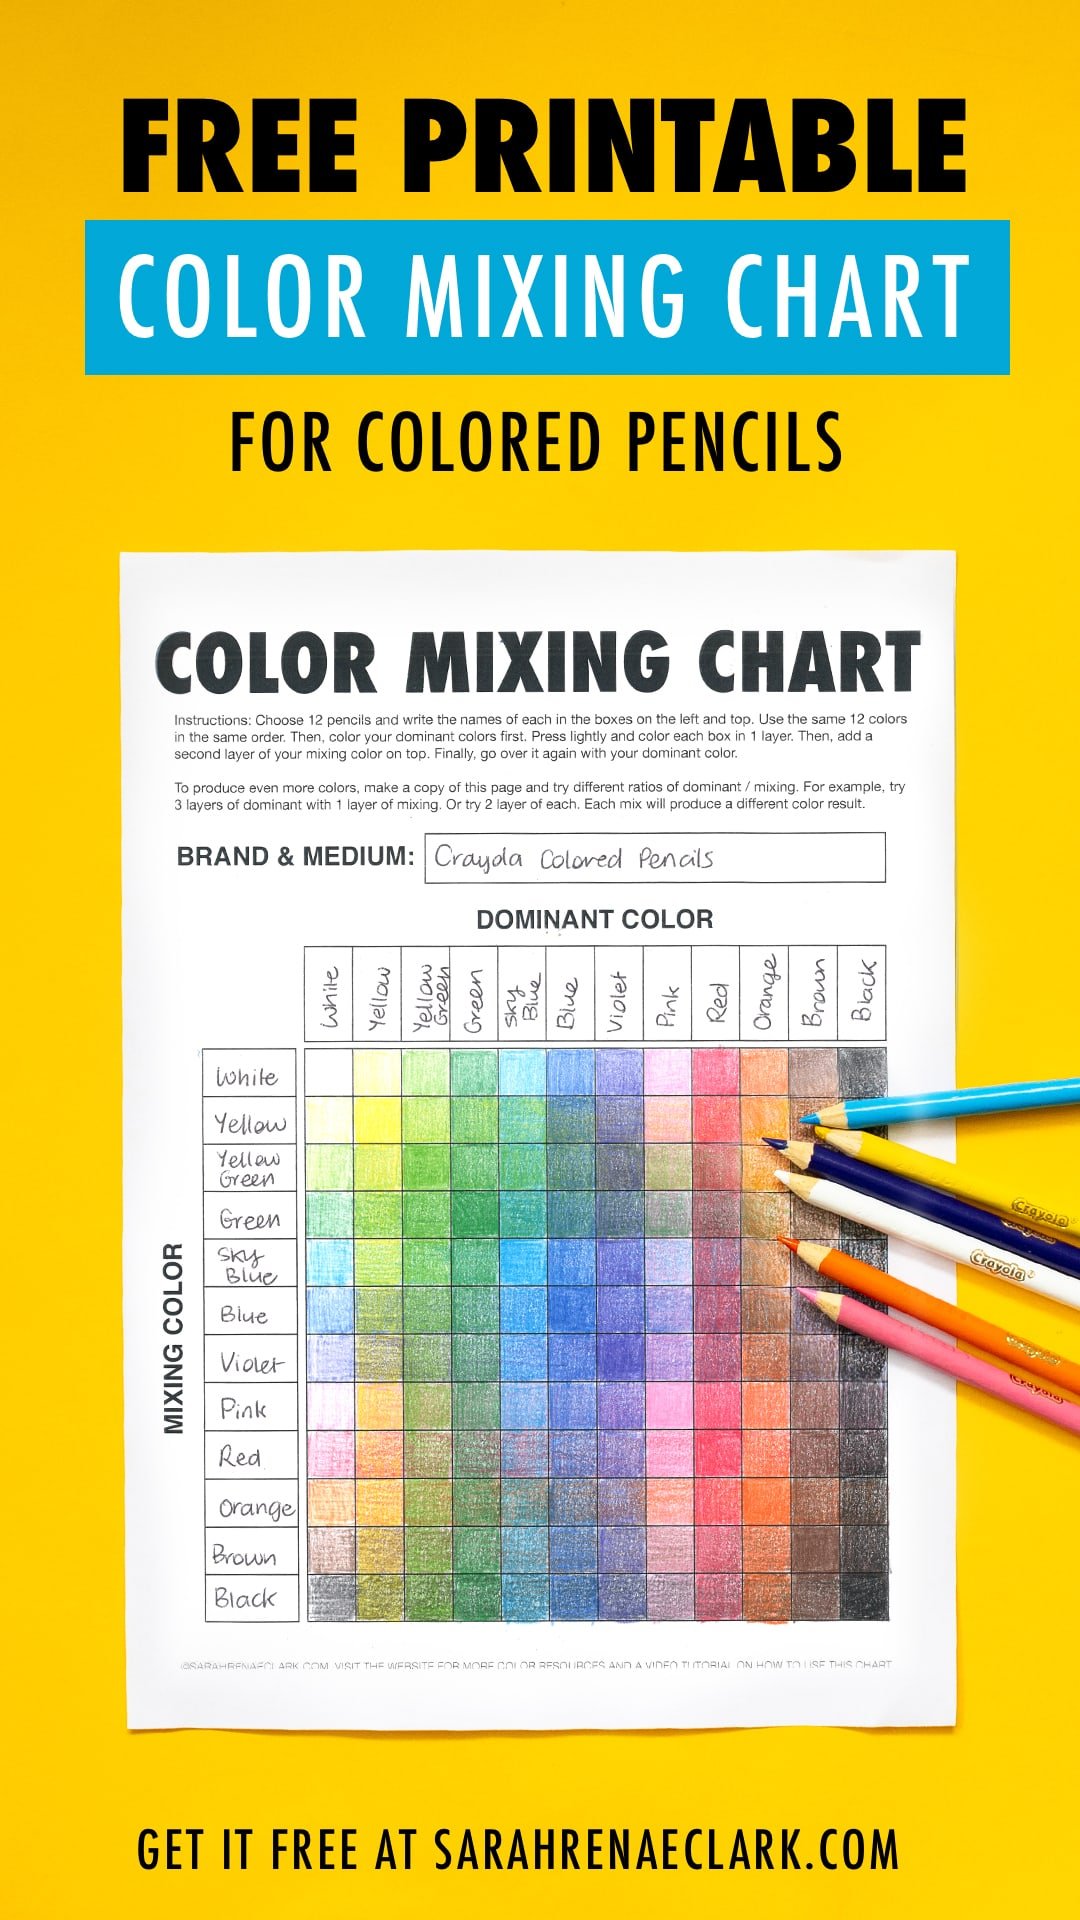 free-color-mixing-chart-2-sarah-renae-clark-coloring-book-artist